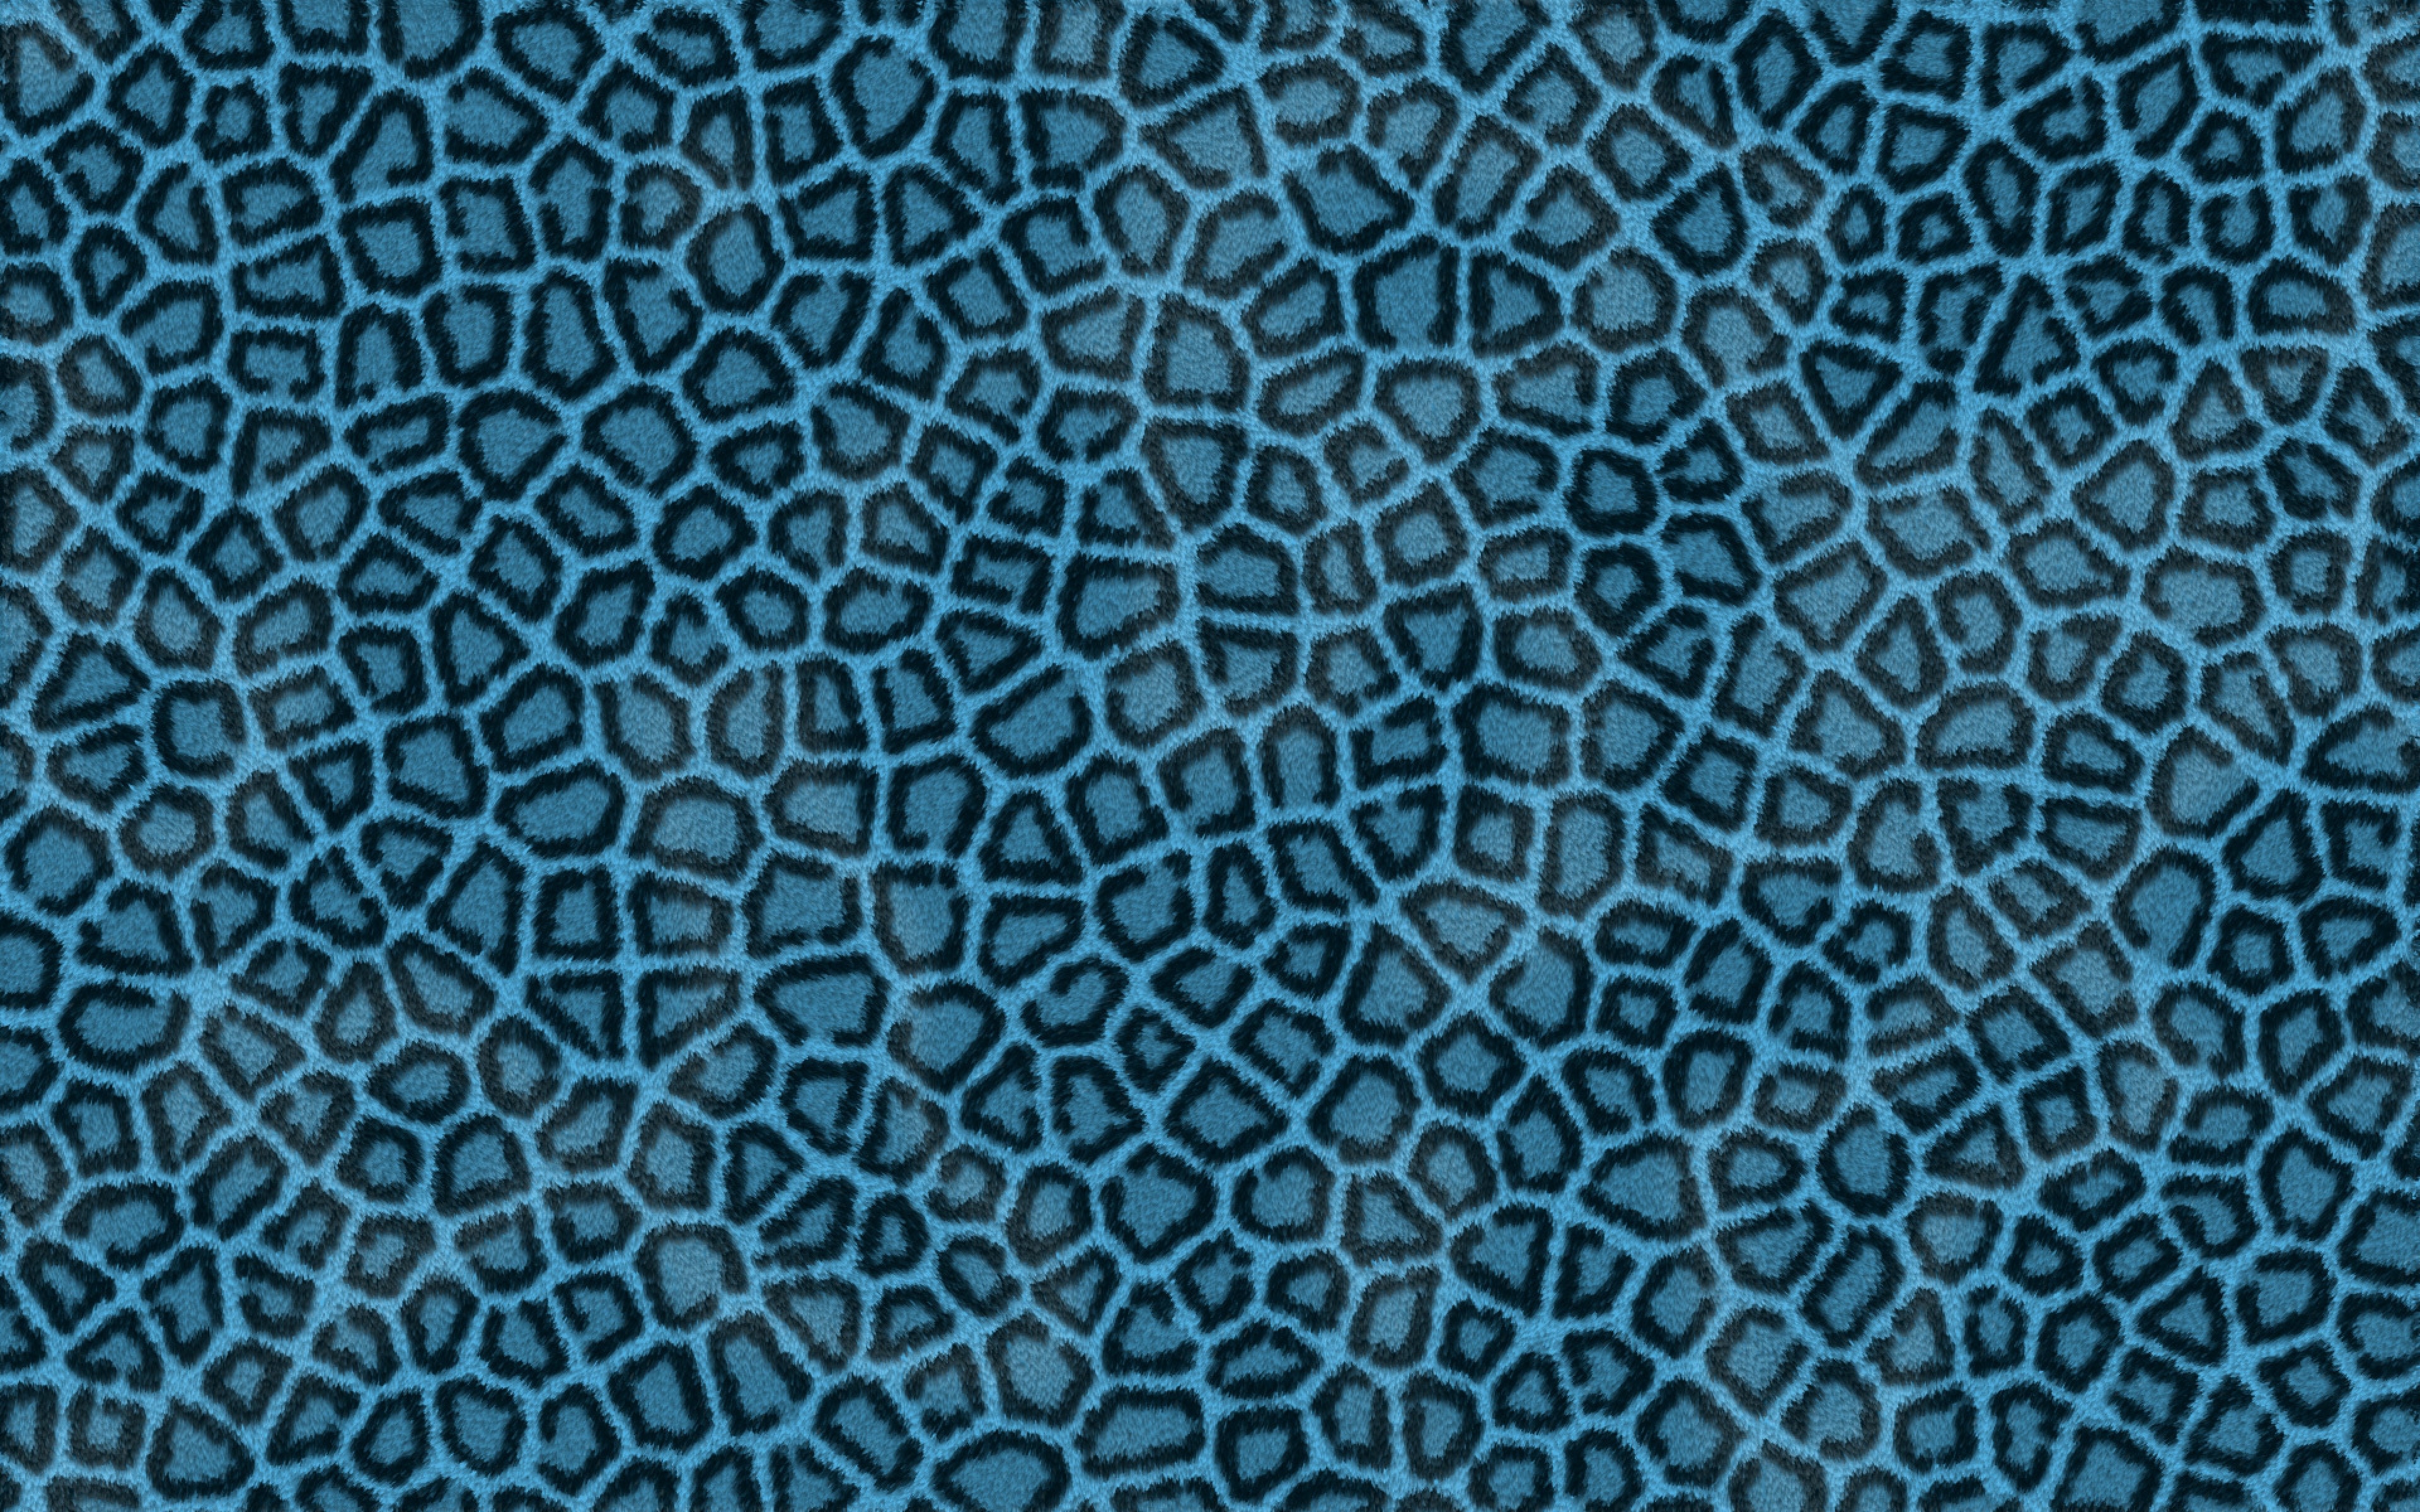  Leopard Skin Light Patterns Wallpaper Background Ultra HD 4K 3840x2400